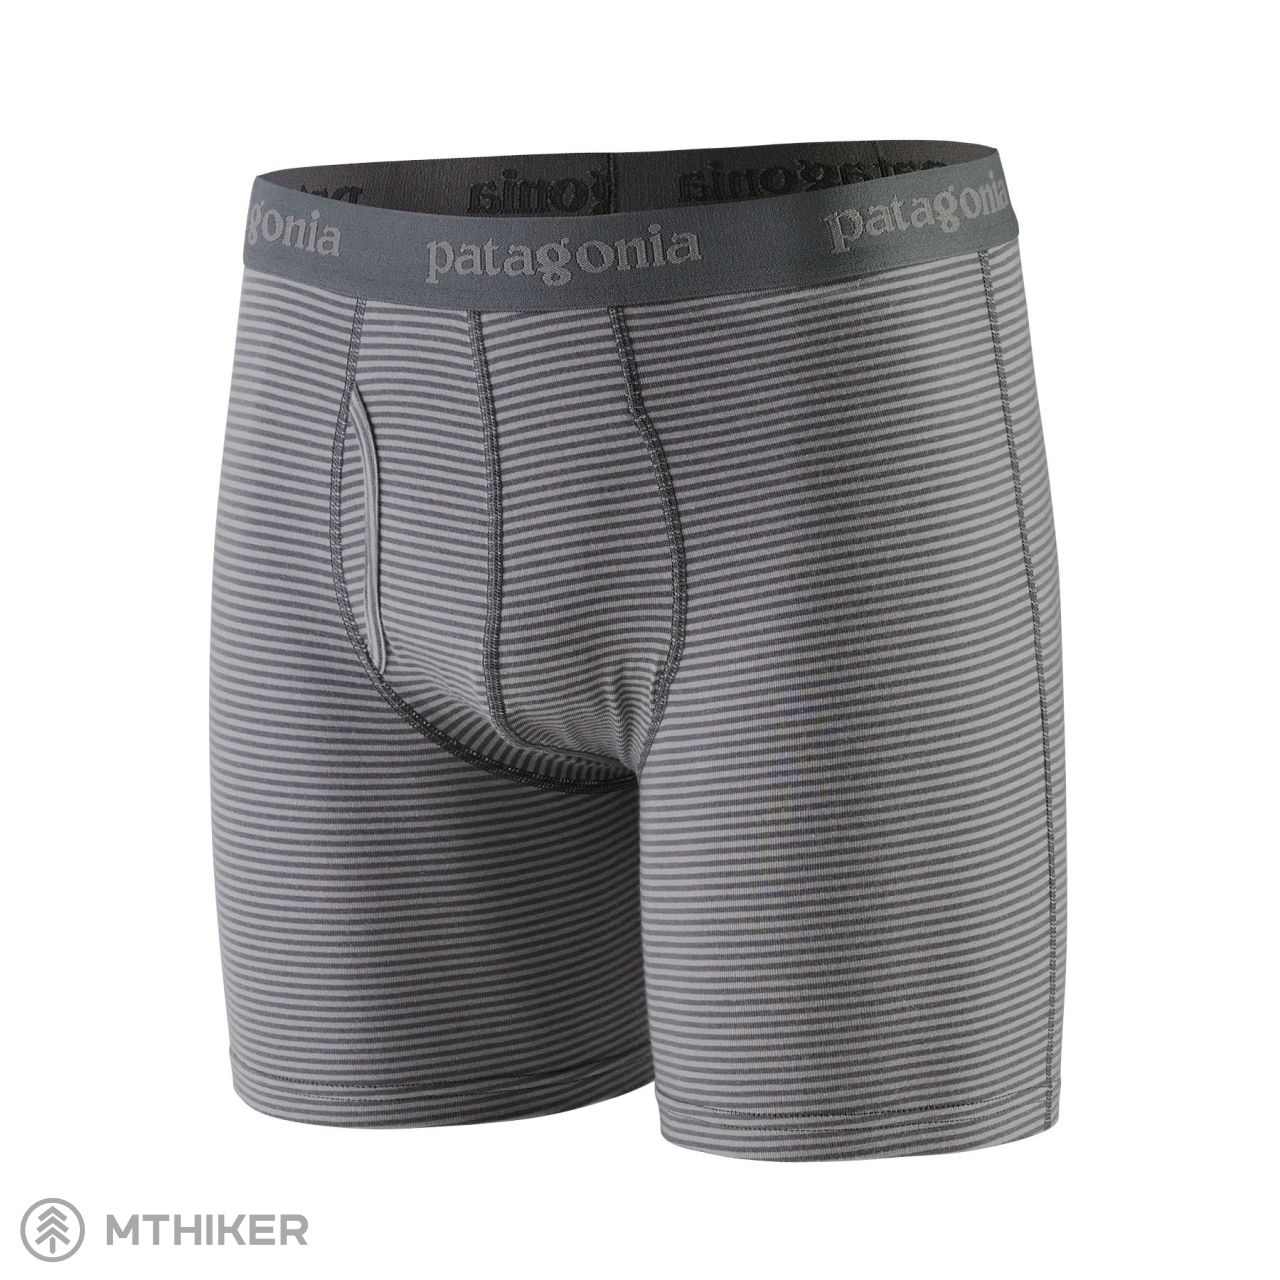 Patagonia Essential Boxer Briefs boxerky, fathom: forge grey